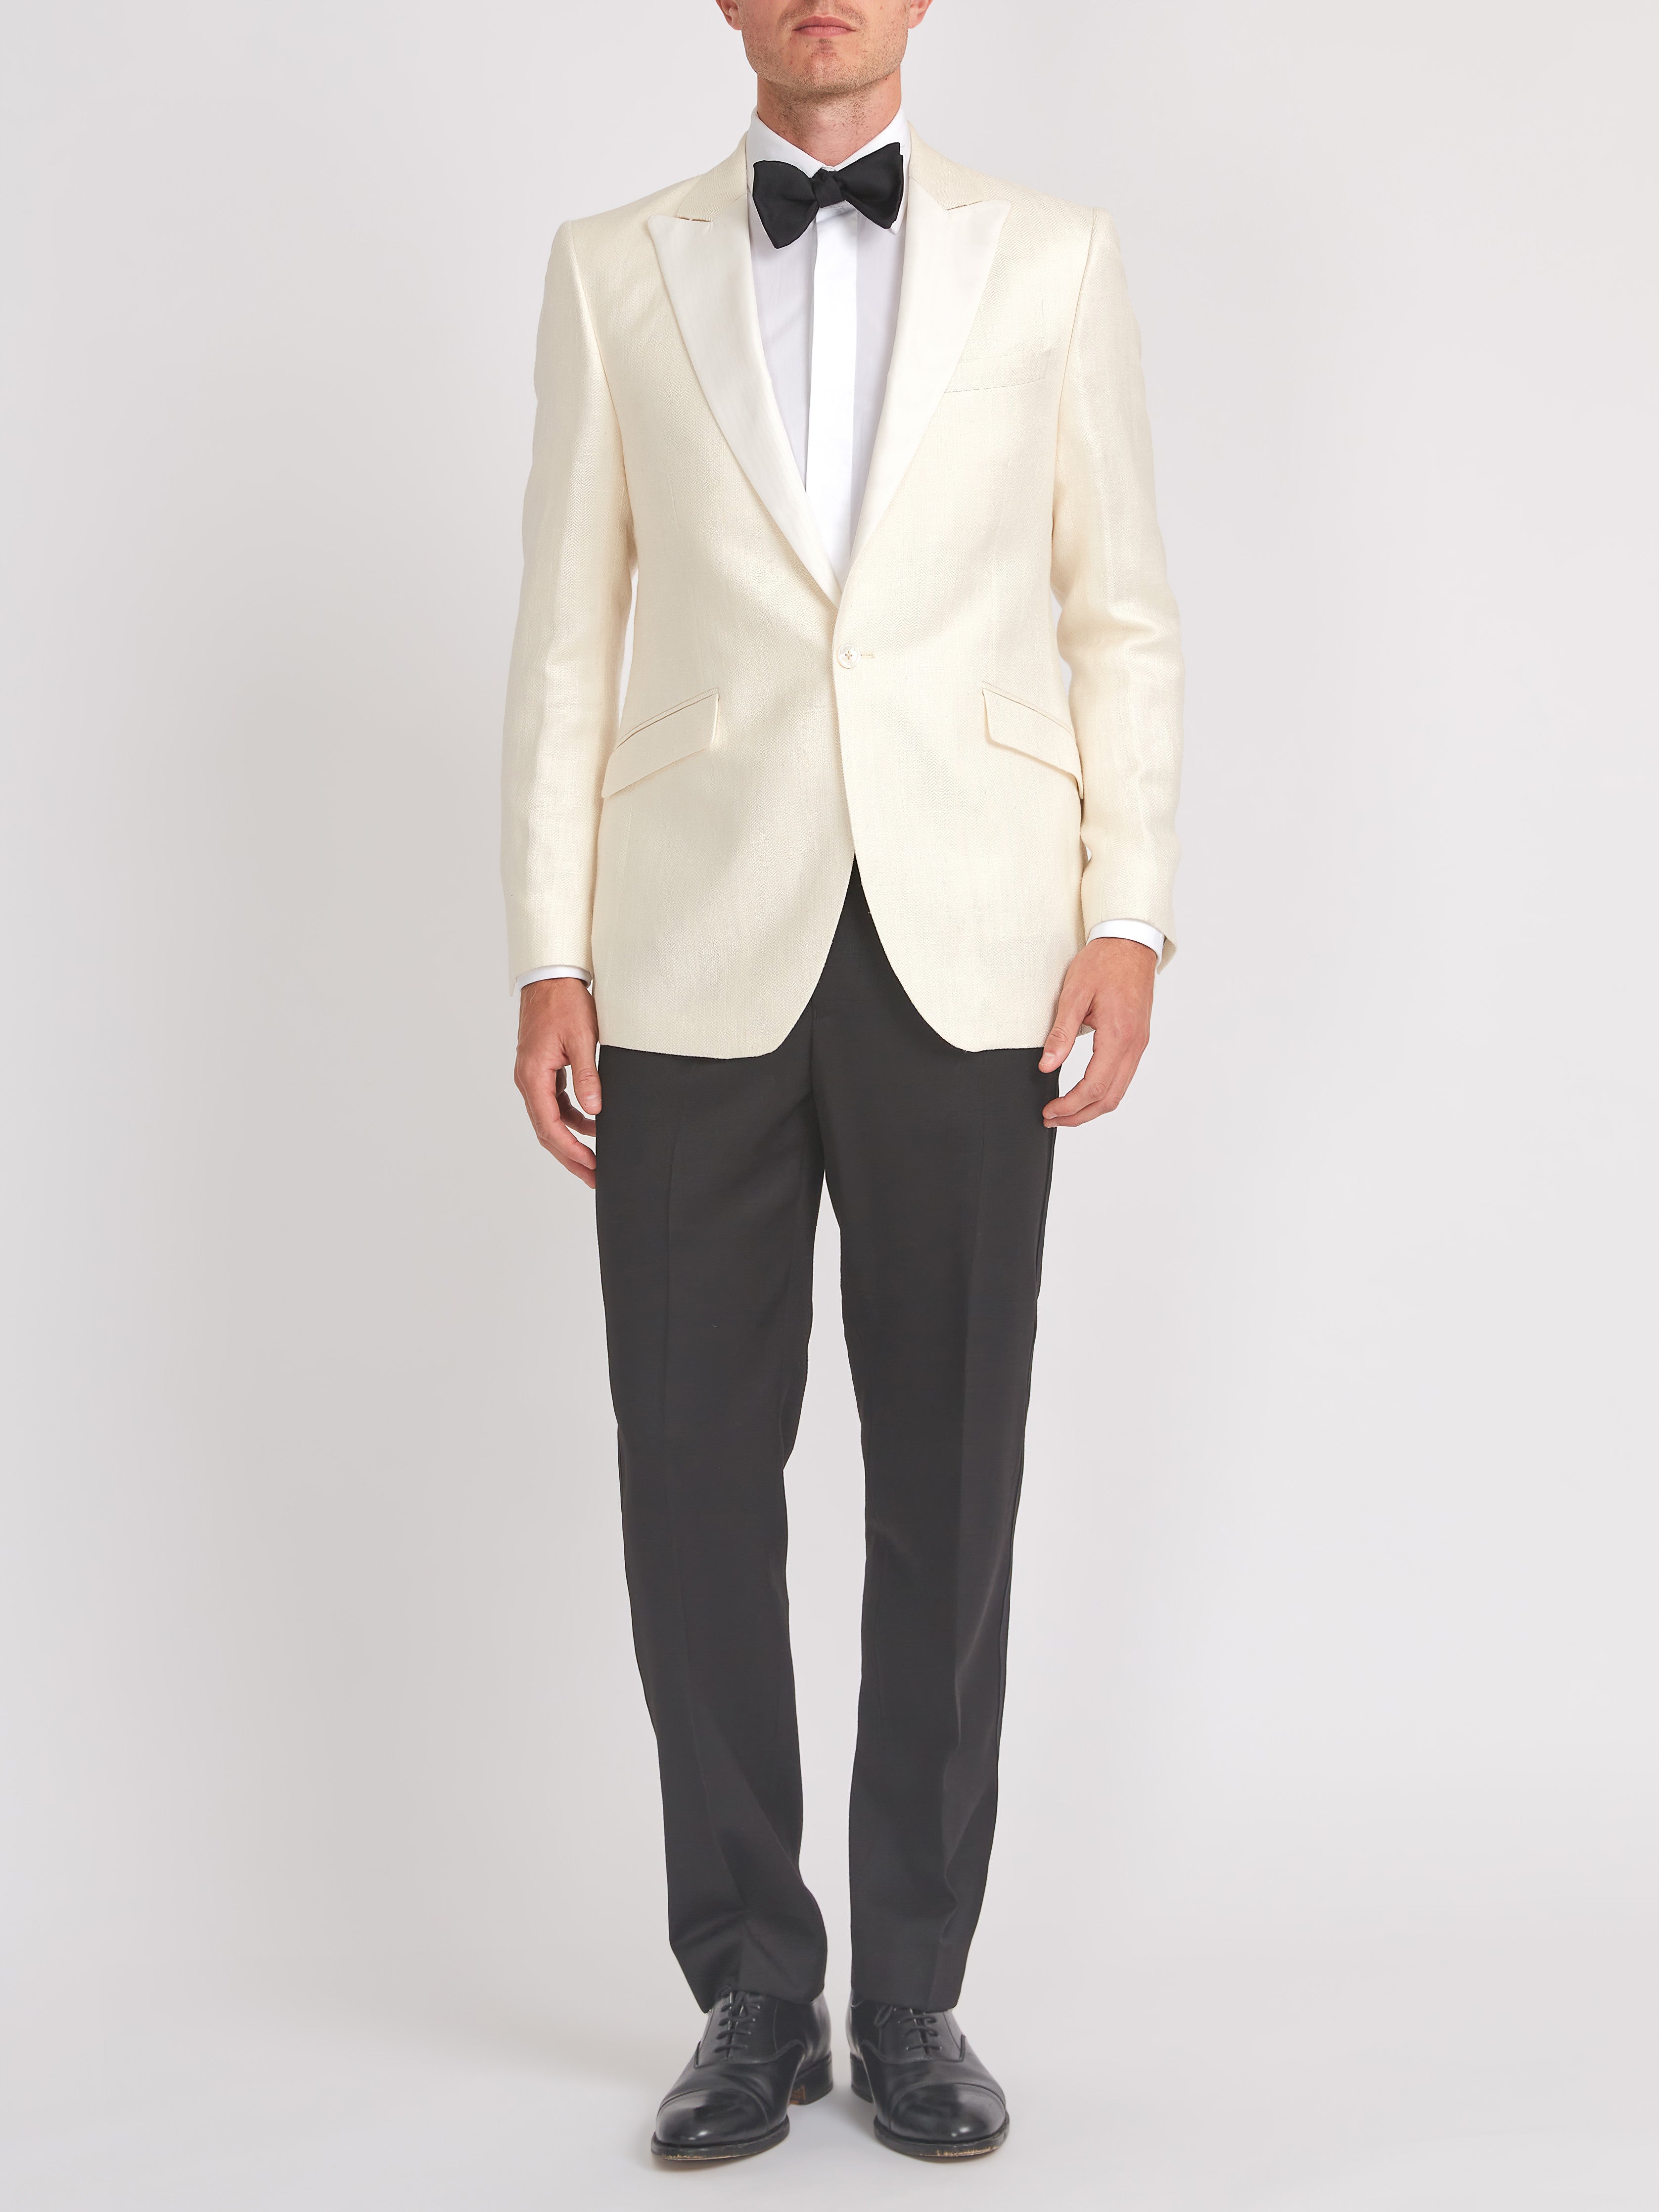 Always Sophisticated Tuxedo Blazer Pant Set - White